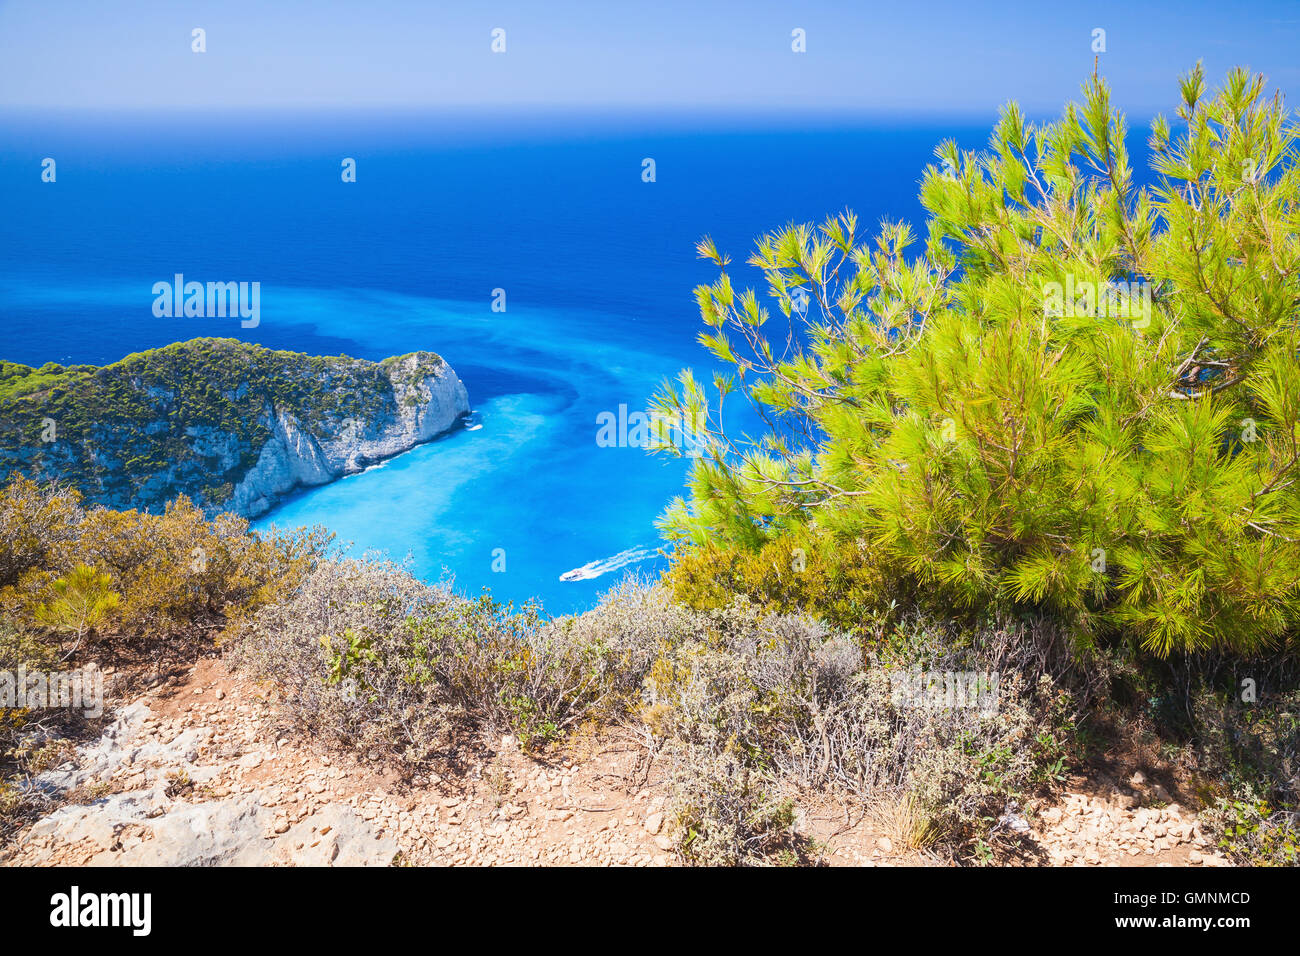 Navagio bay coastal landscape. The most famous landmark of Greek island Zakynthos Stock Photo